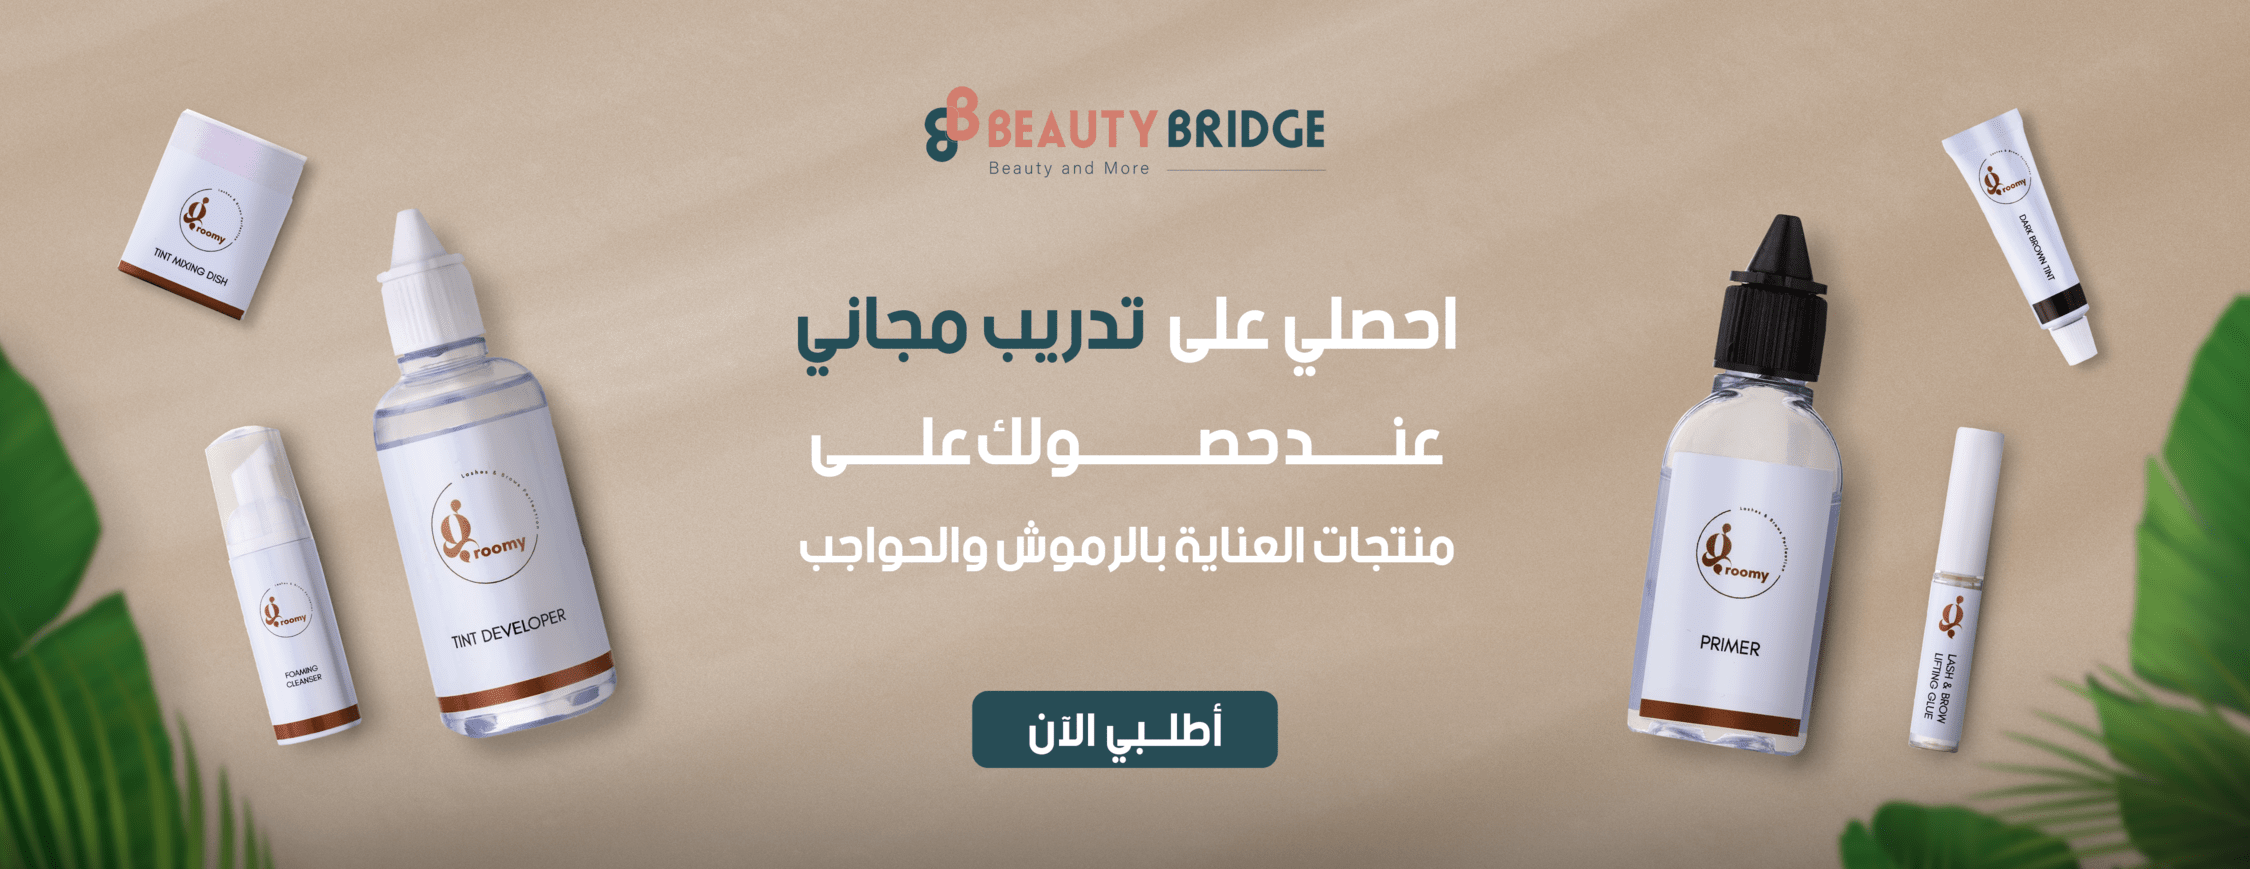 Beauty Bridge image-slider-2